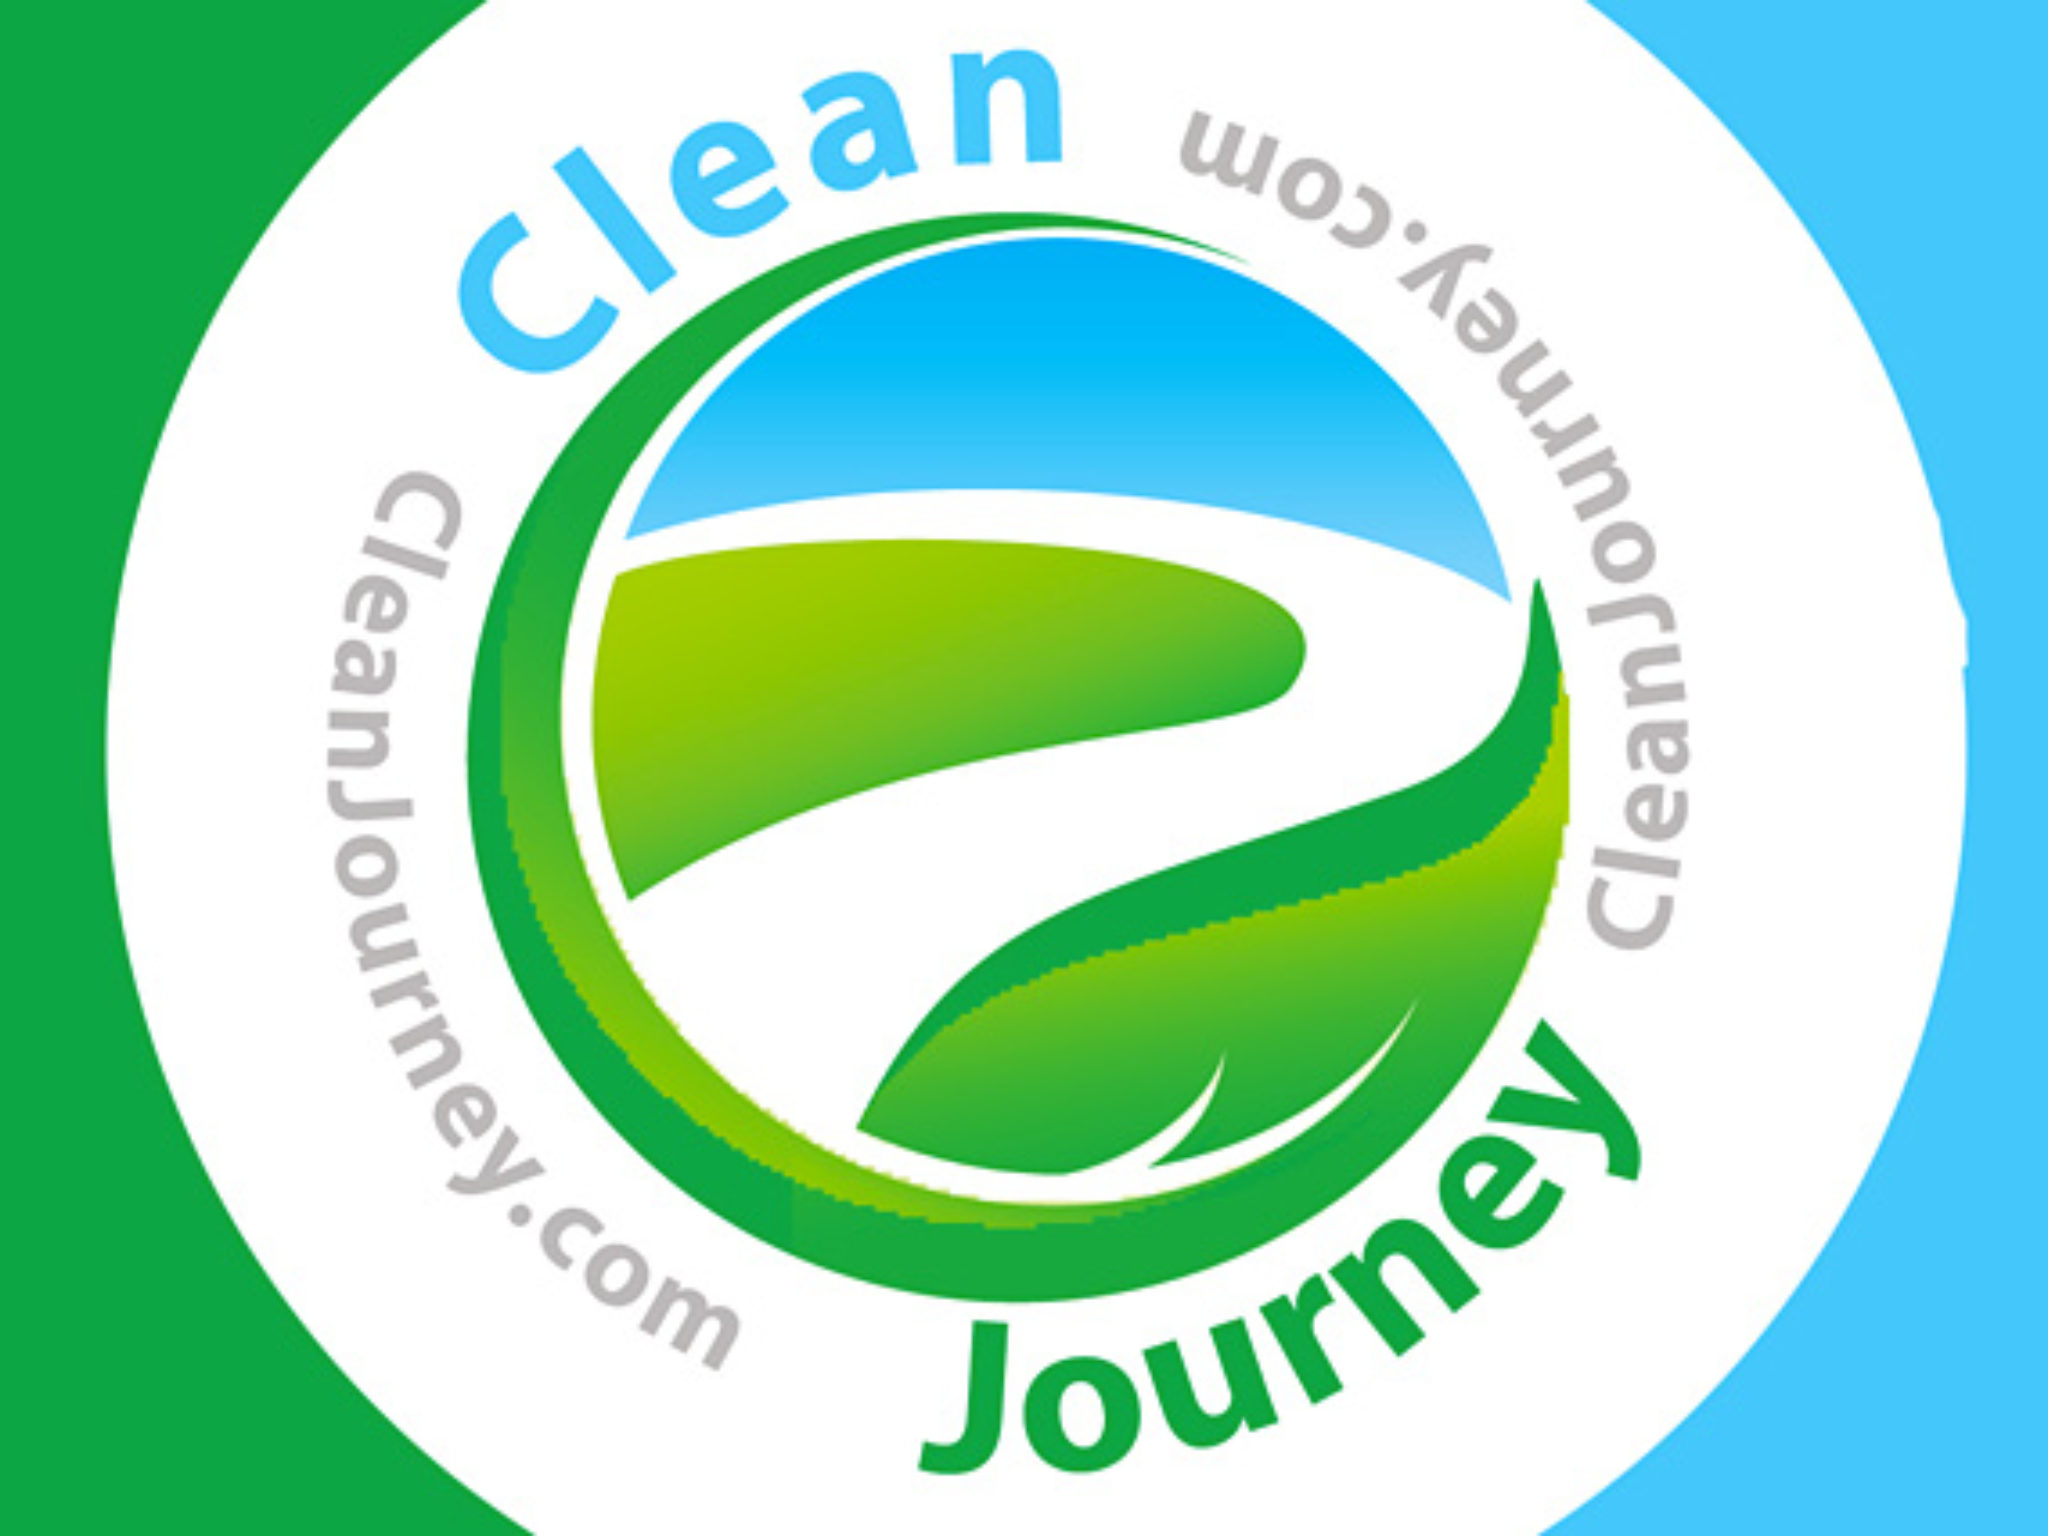 cleanourneylogo066__0015_Clean Journey